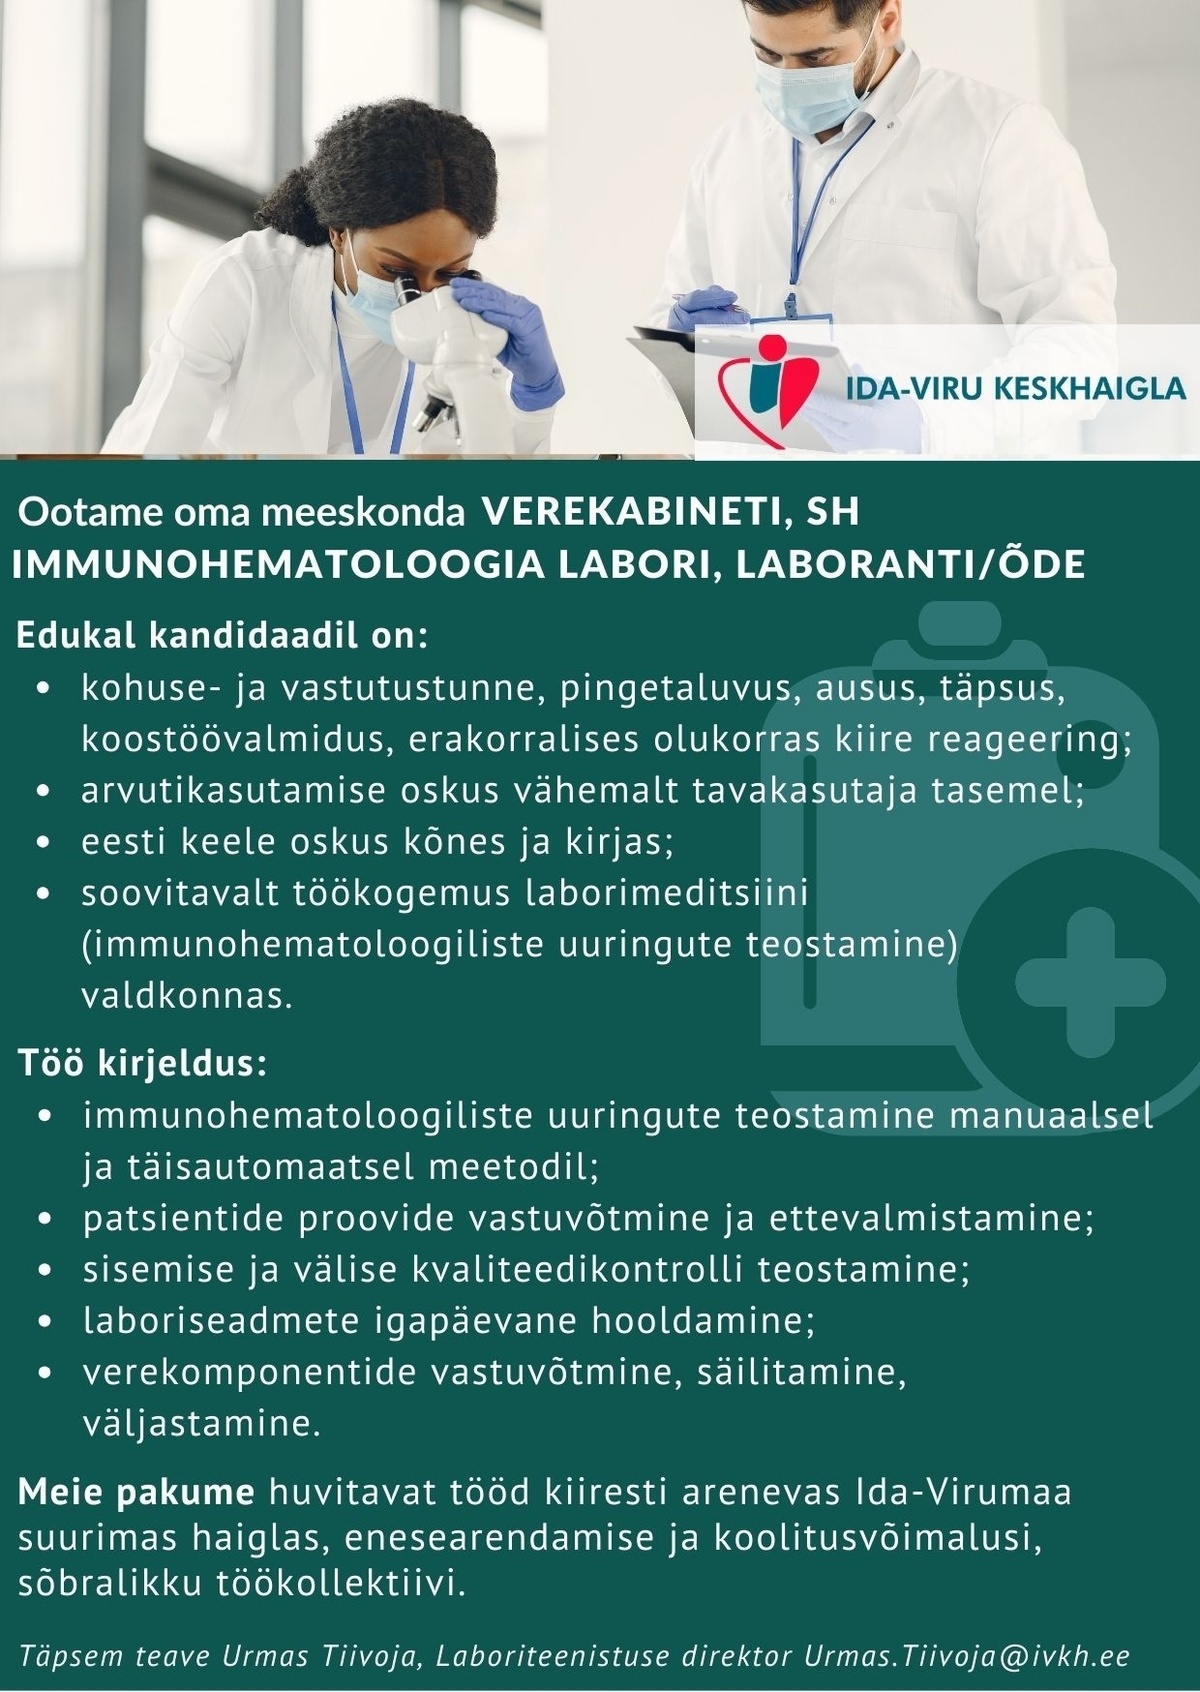 Ida-Viru Keskhaigla SA Verekabineti, sh immunohematoloogia labori, laborant/õde